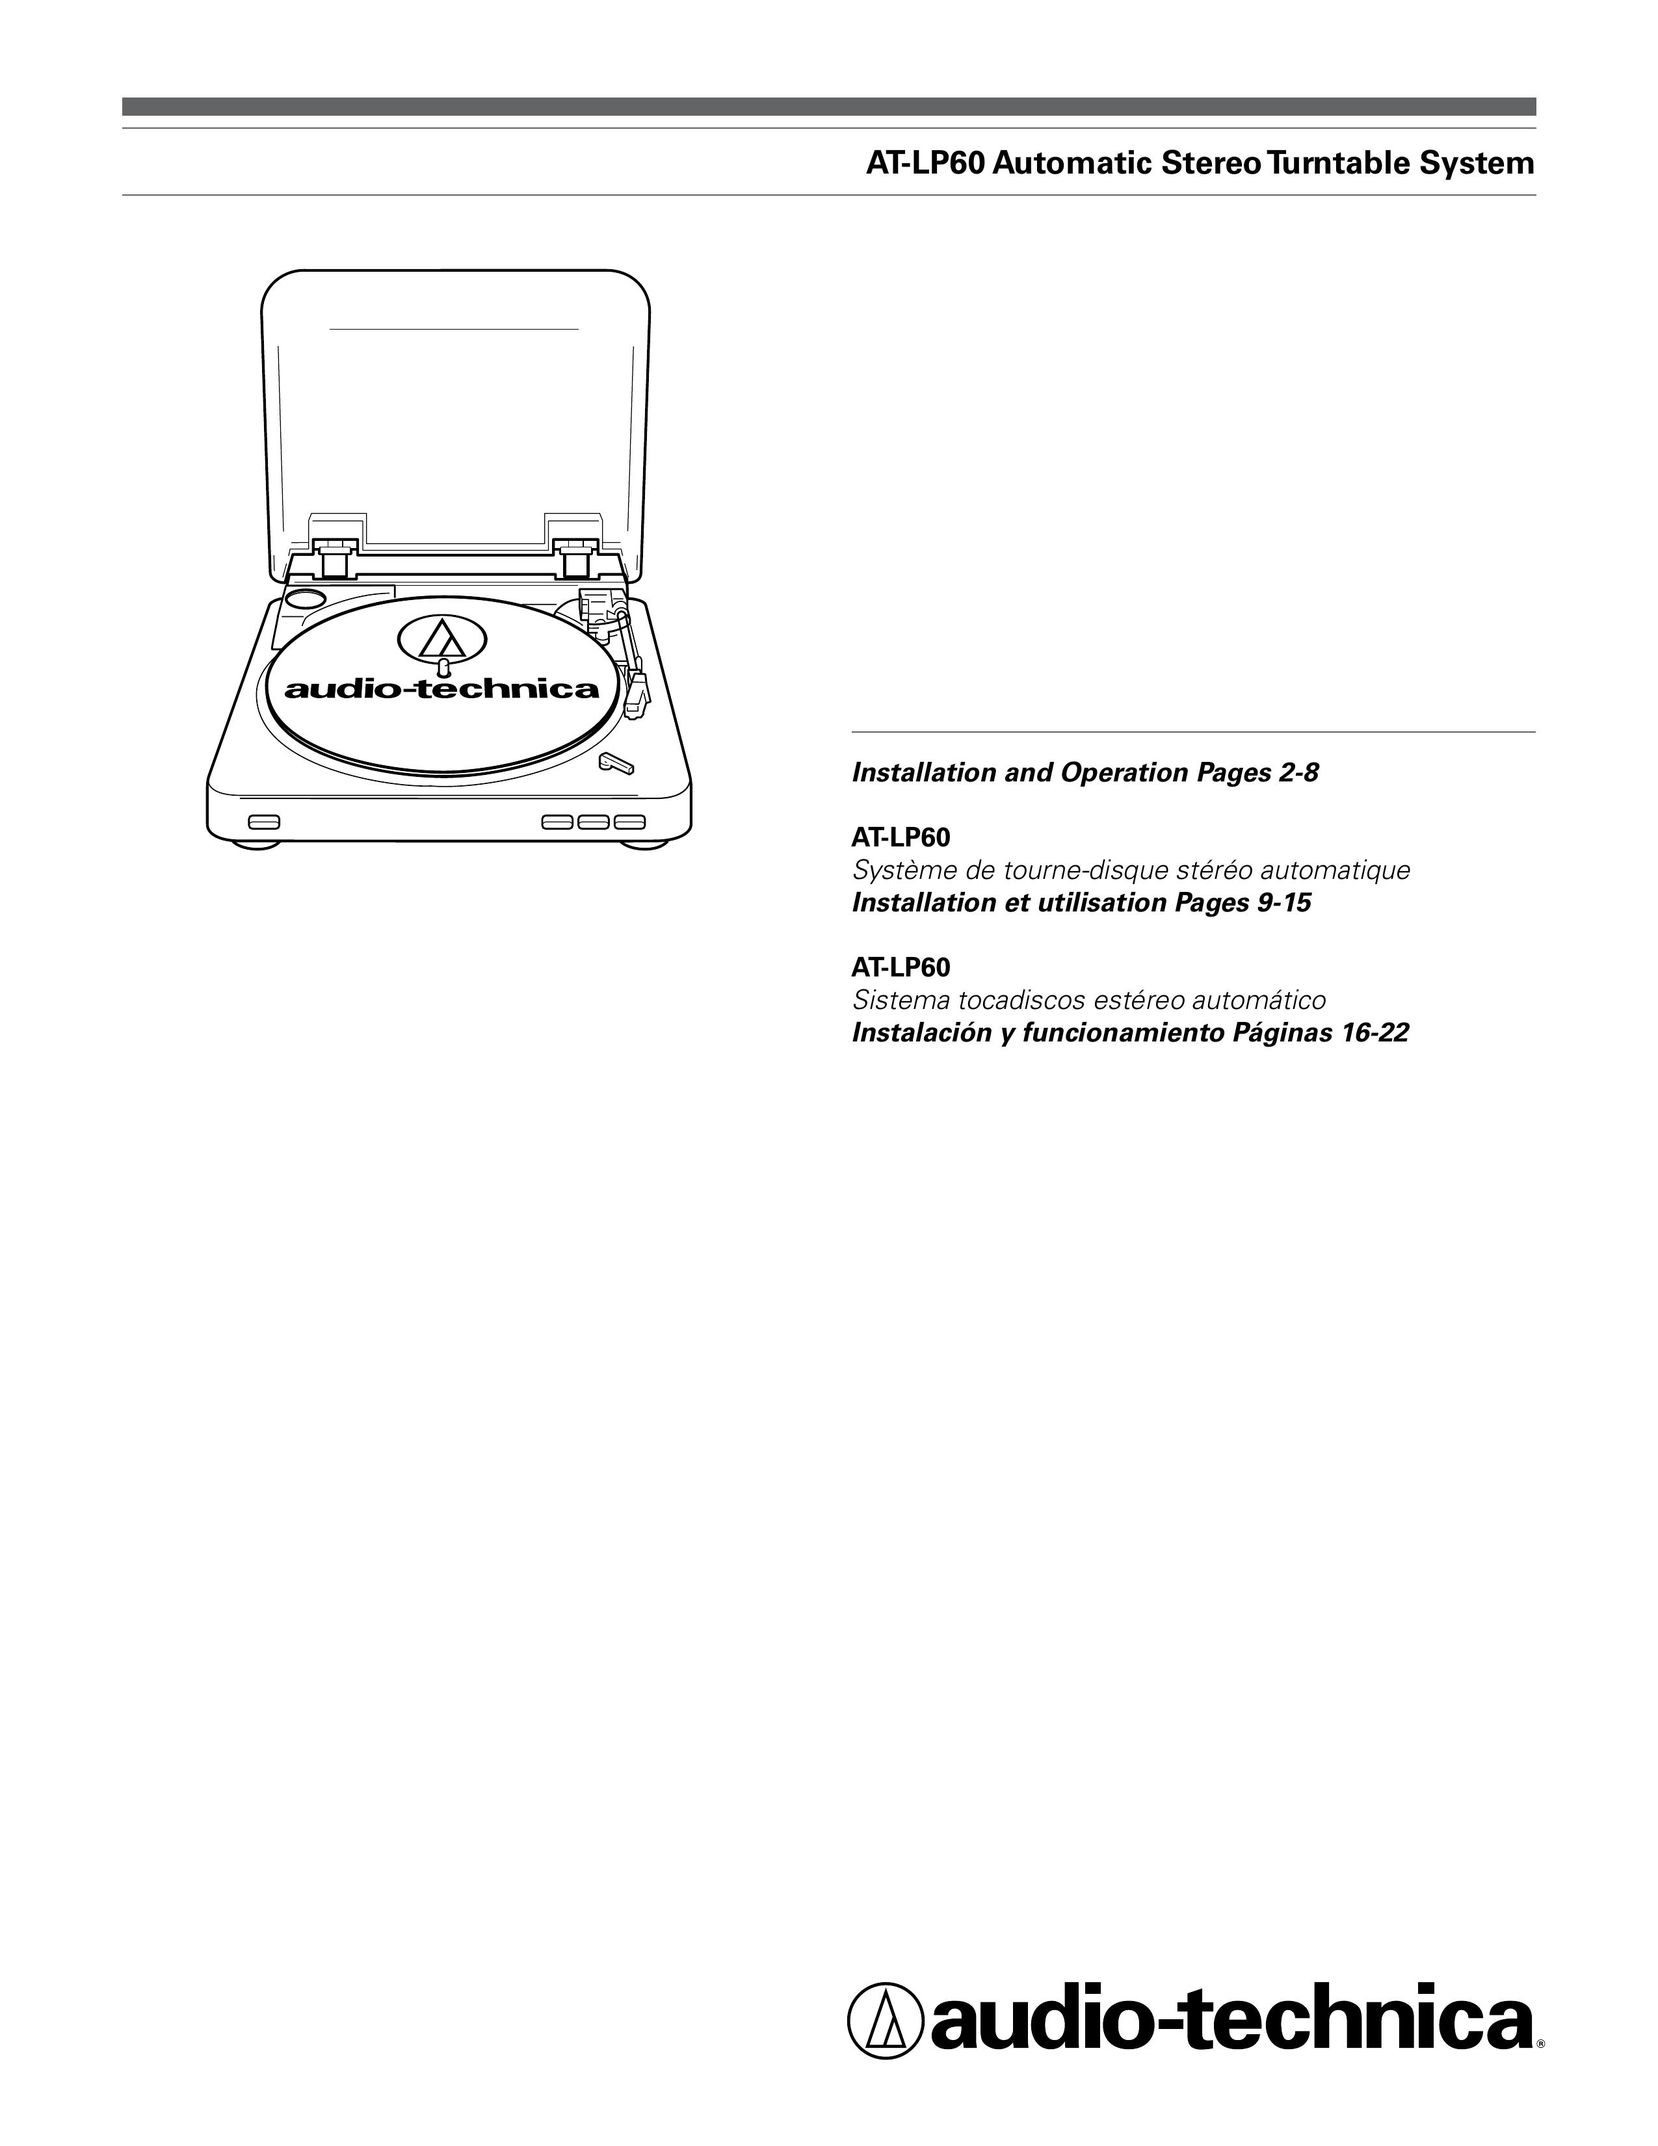 Audio-Technica AT-LP60 Turntable User Manual